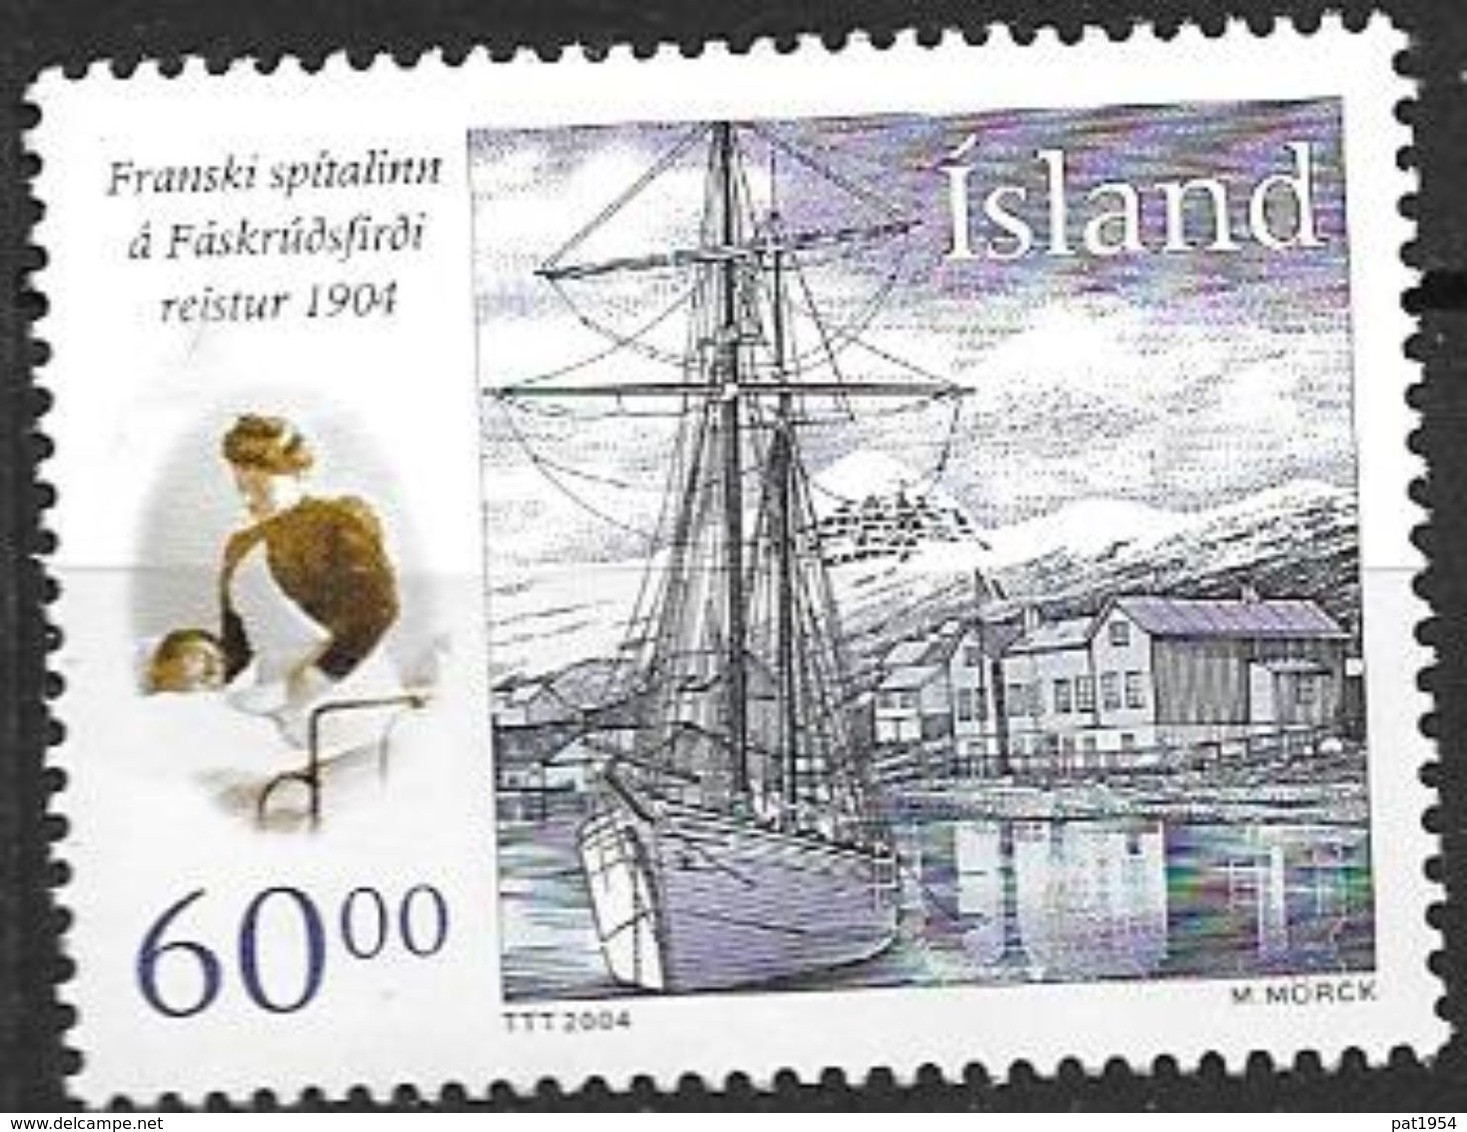 Islande 2004 N°1005 Neuf** Hopital Français - Ungebraucht